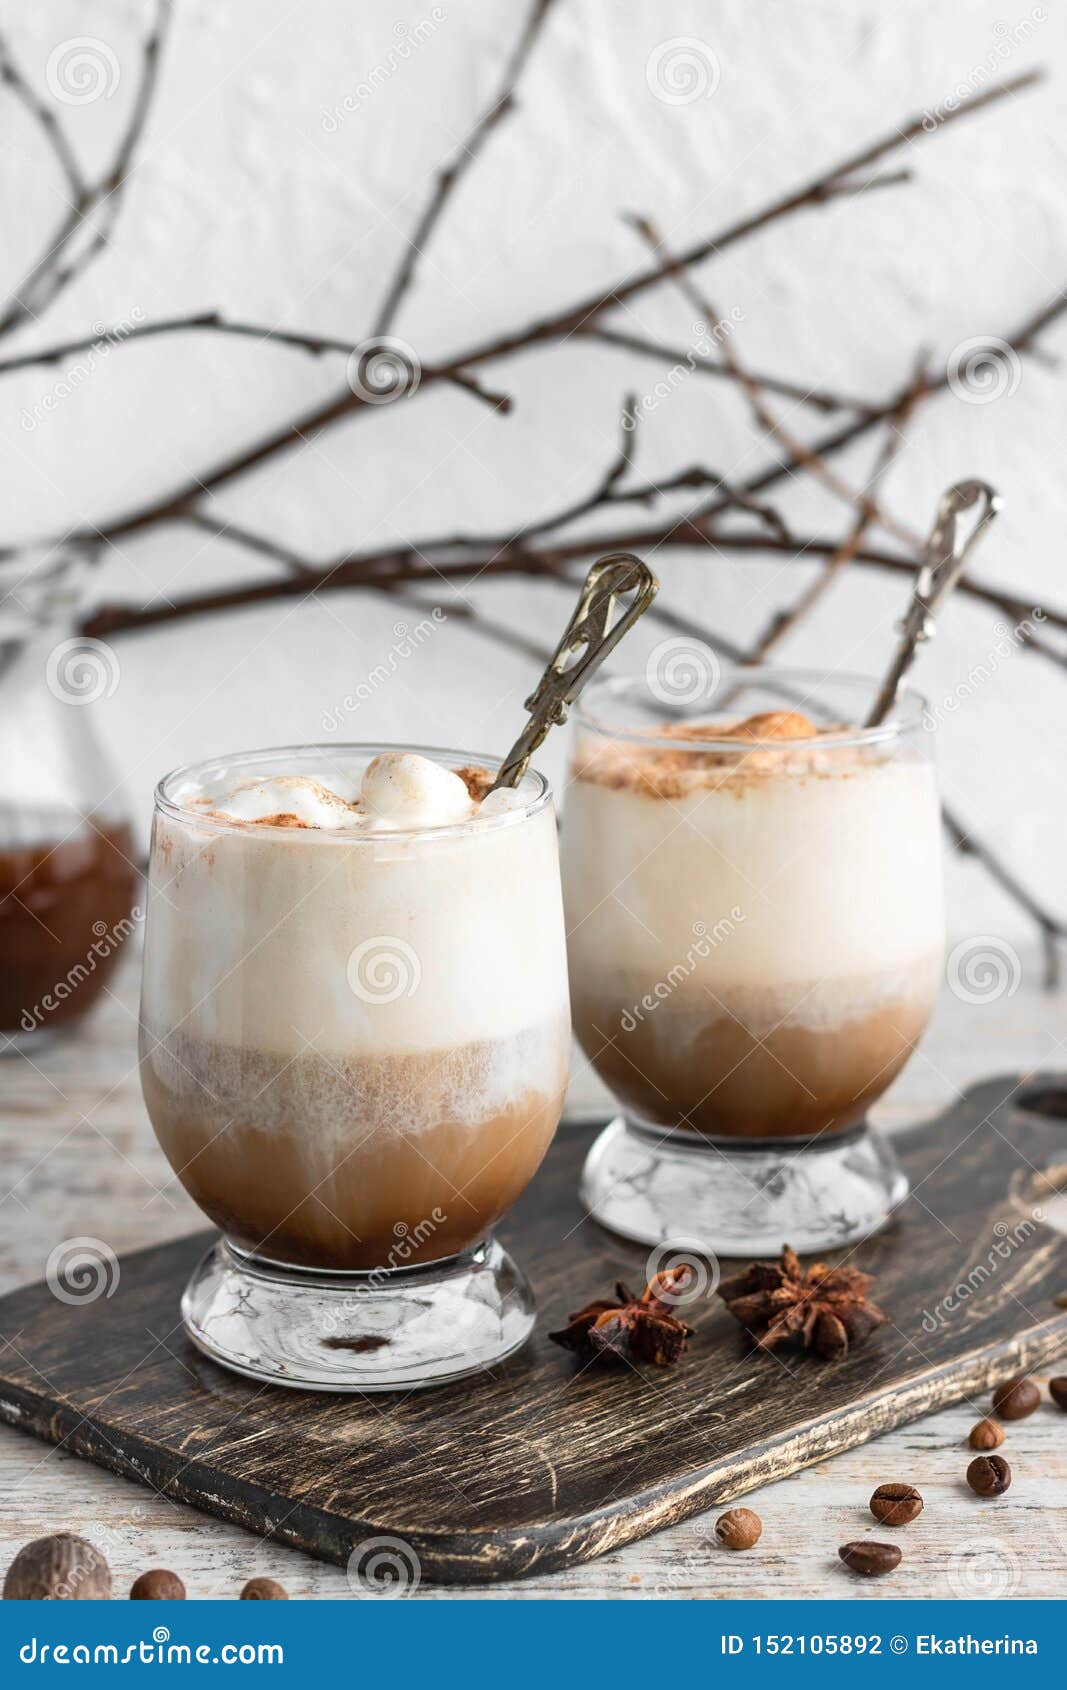 Affogato Coffee with Vanilla Ice Cream and Cinnamon Stock Photo - Image ...